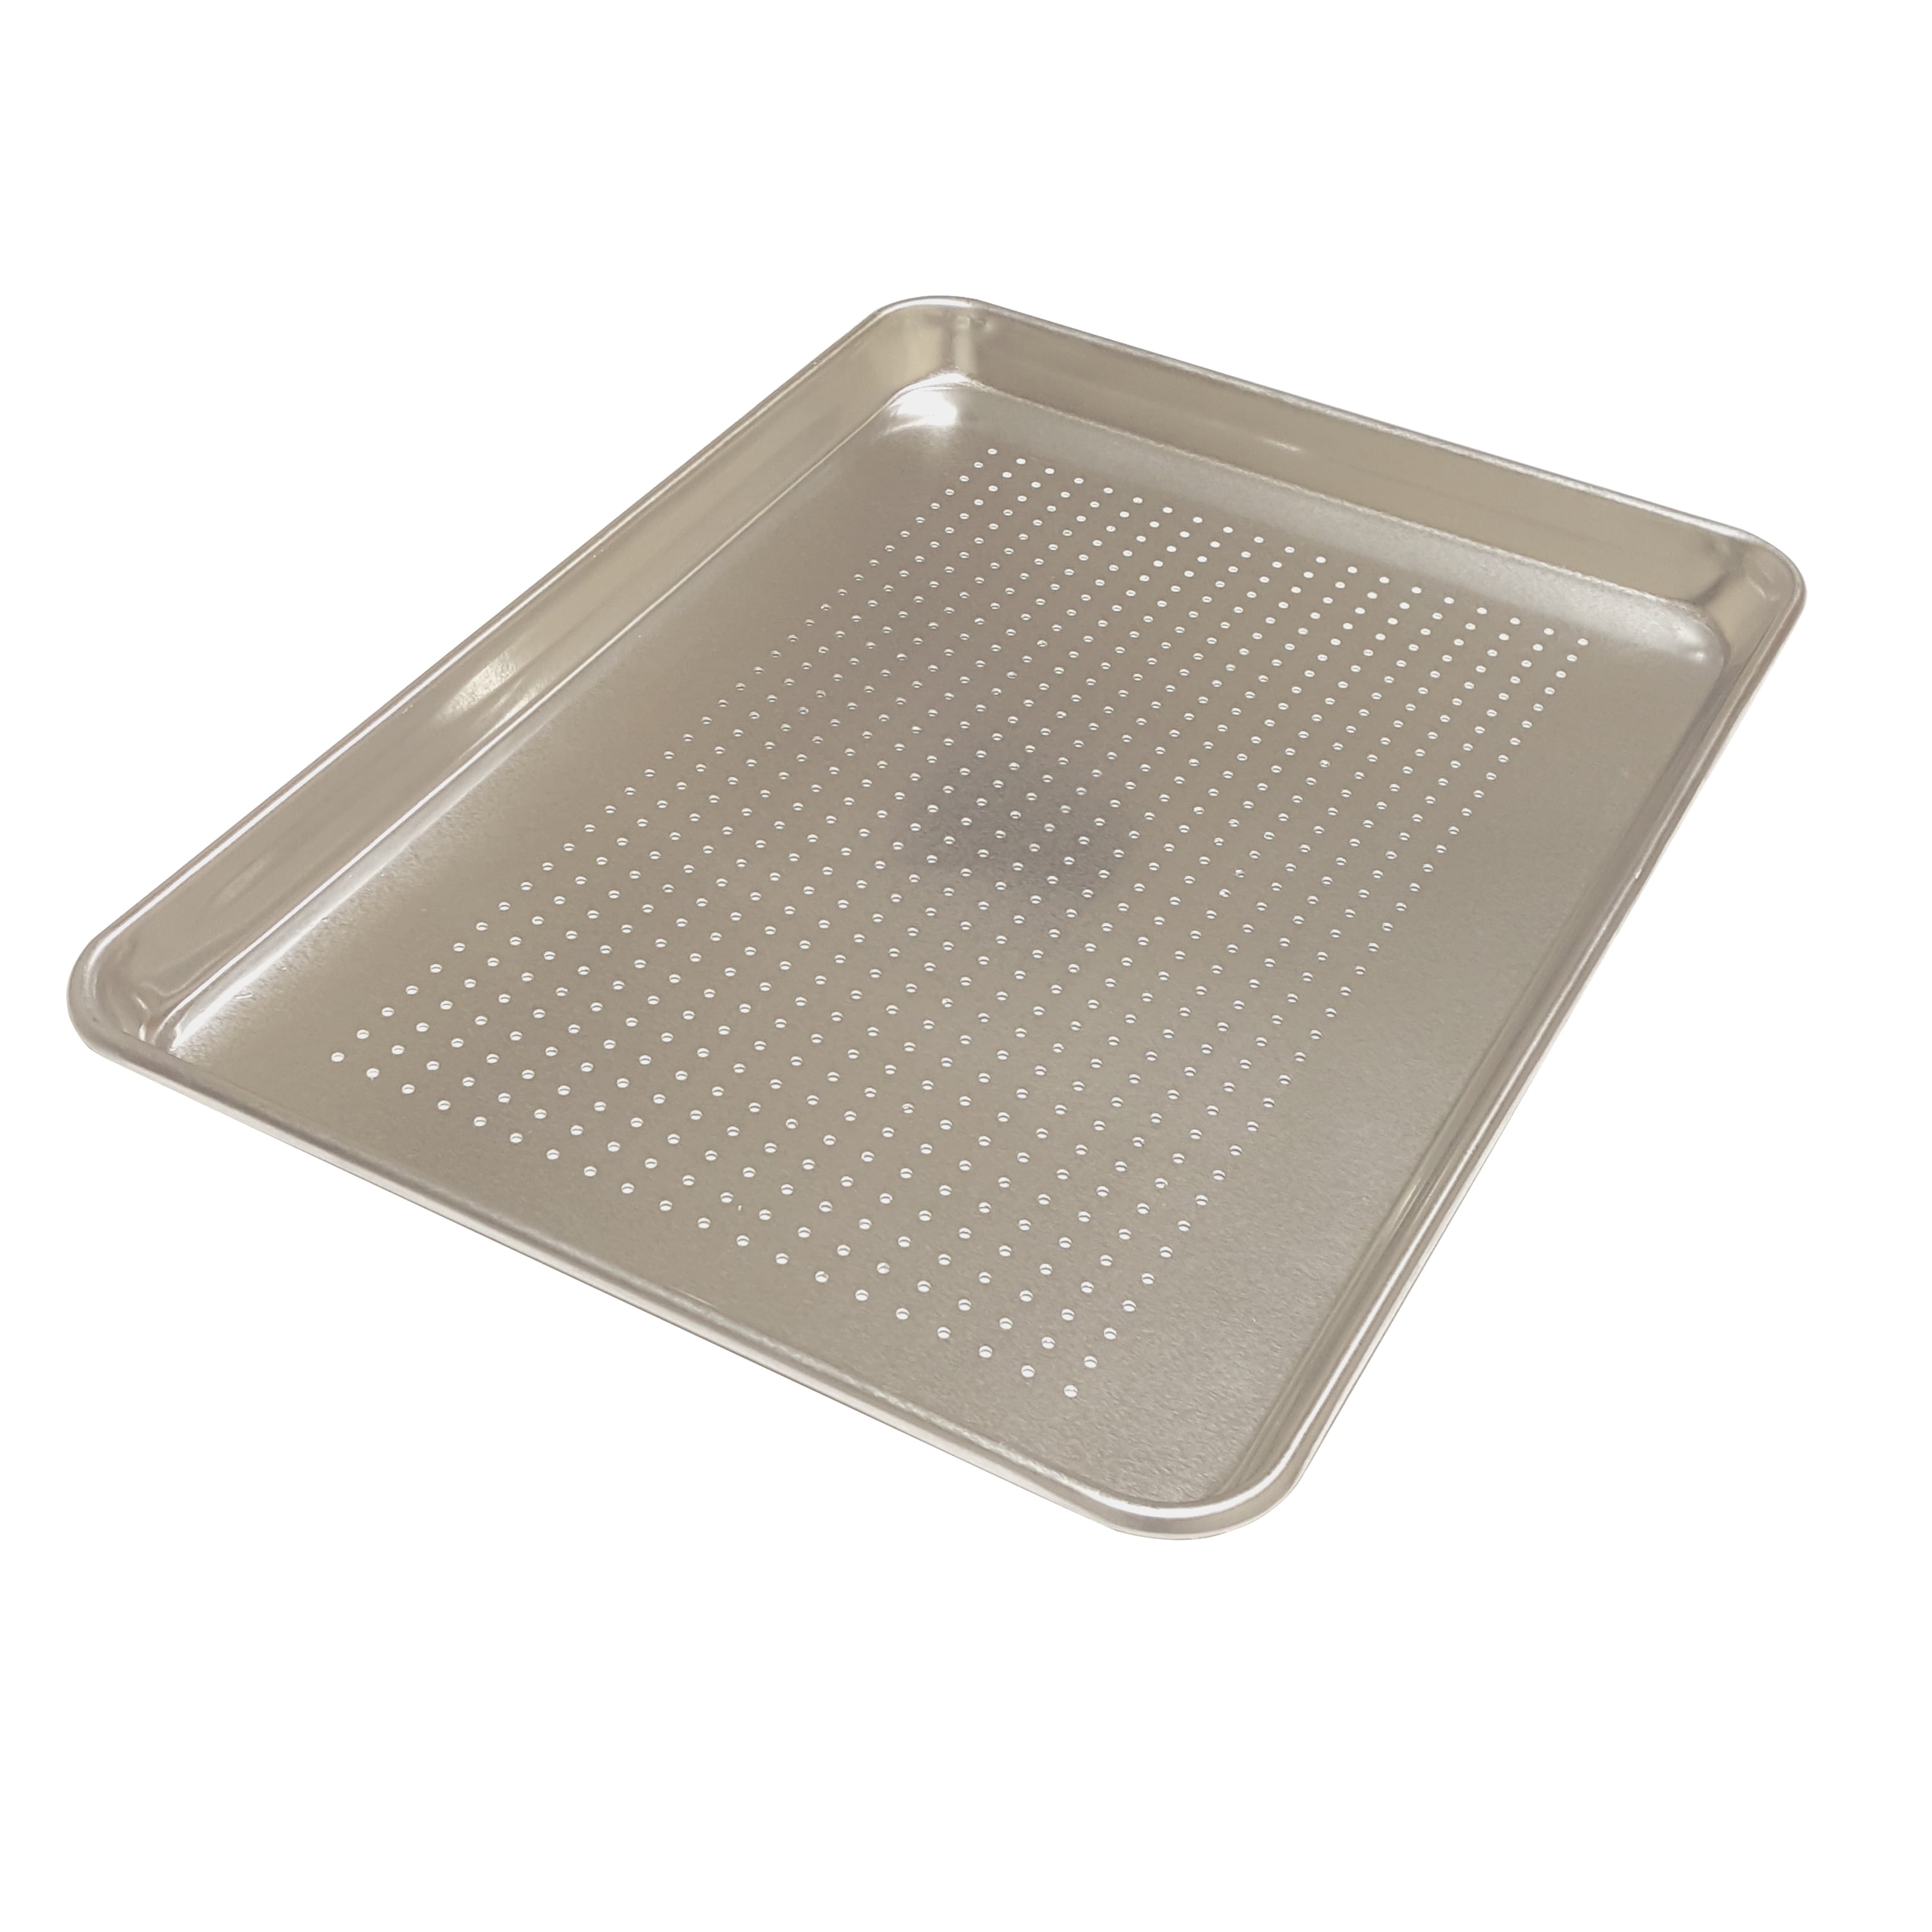 Full Sheet Pans Size Pan Perforated Baking Aluminum Extend